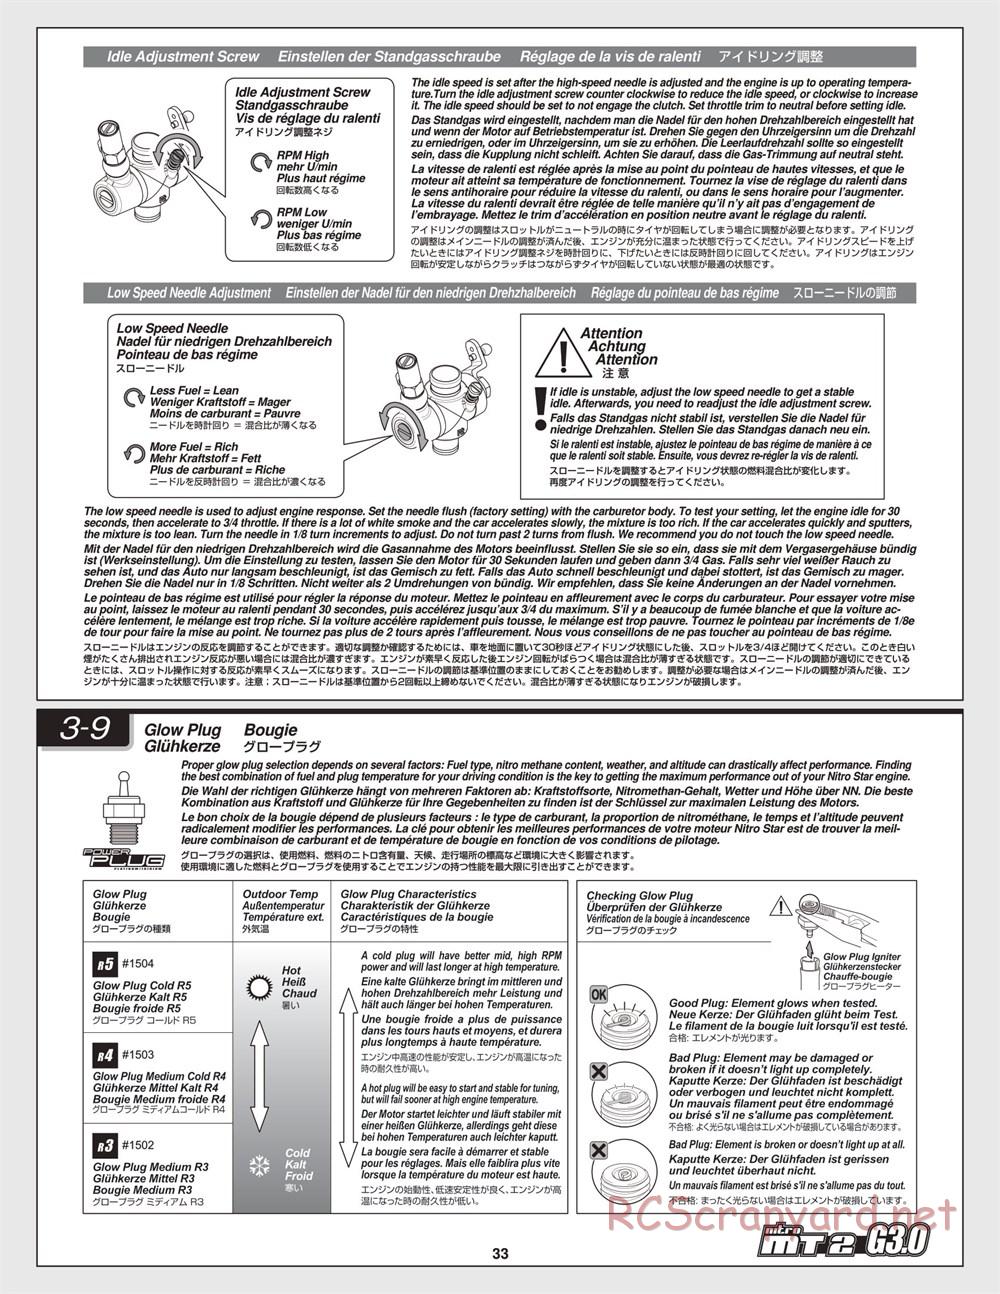 HPI - Nitro MT2 G3.0 - Manual - Page 33